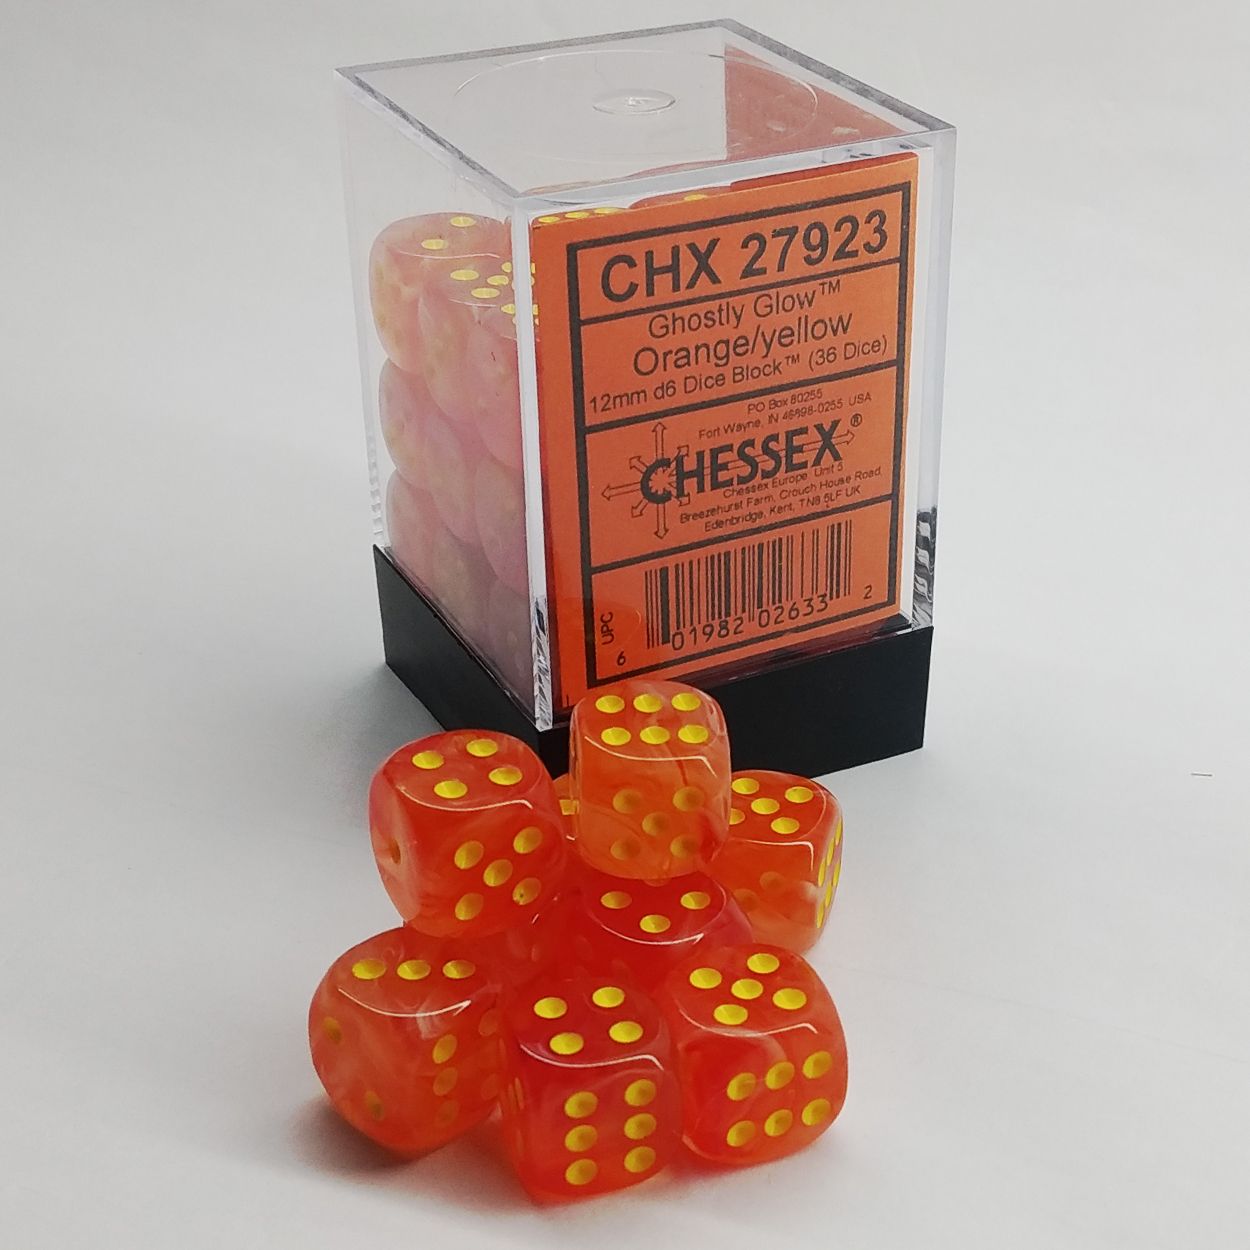 تاس بازی چسکس مدل Ghostly Glow کد CHX 27923 بسته 2 عددی -  - 6